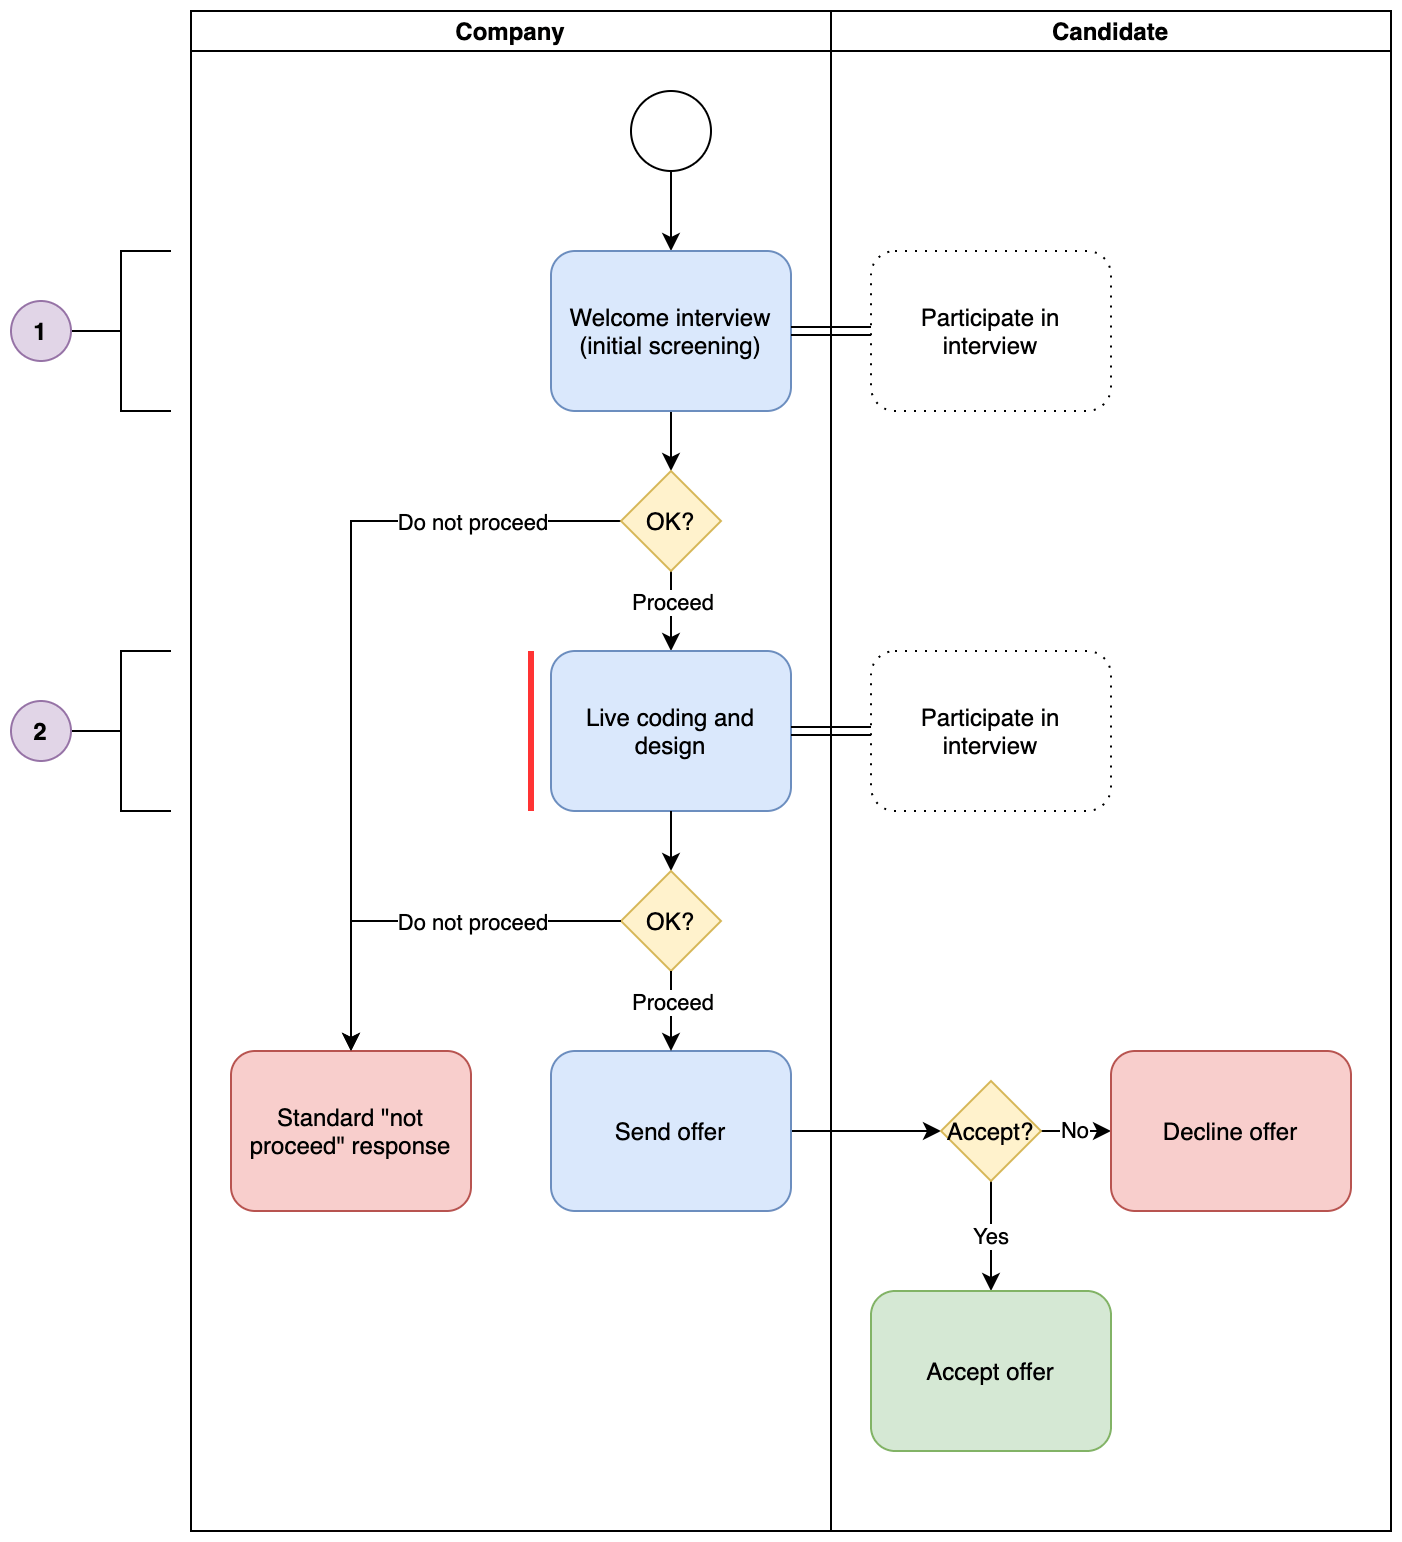 2.4. Process graph